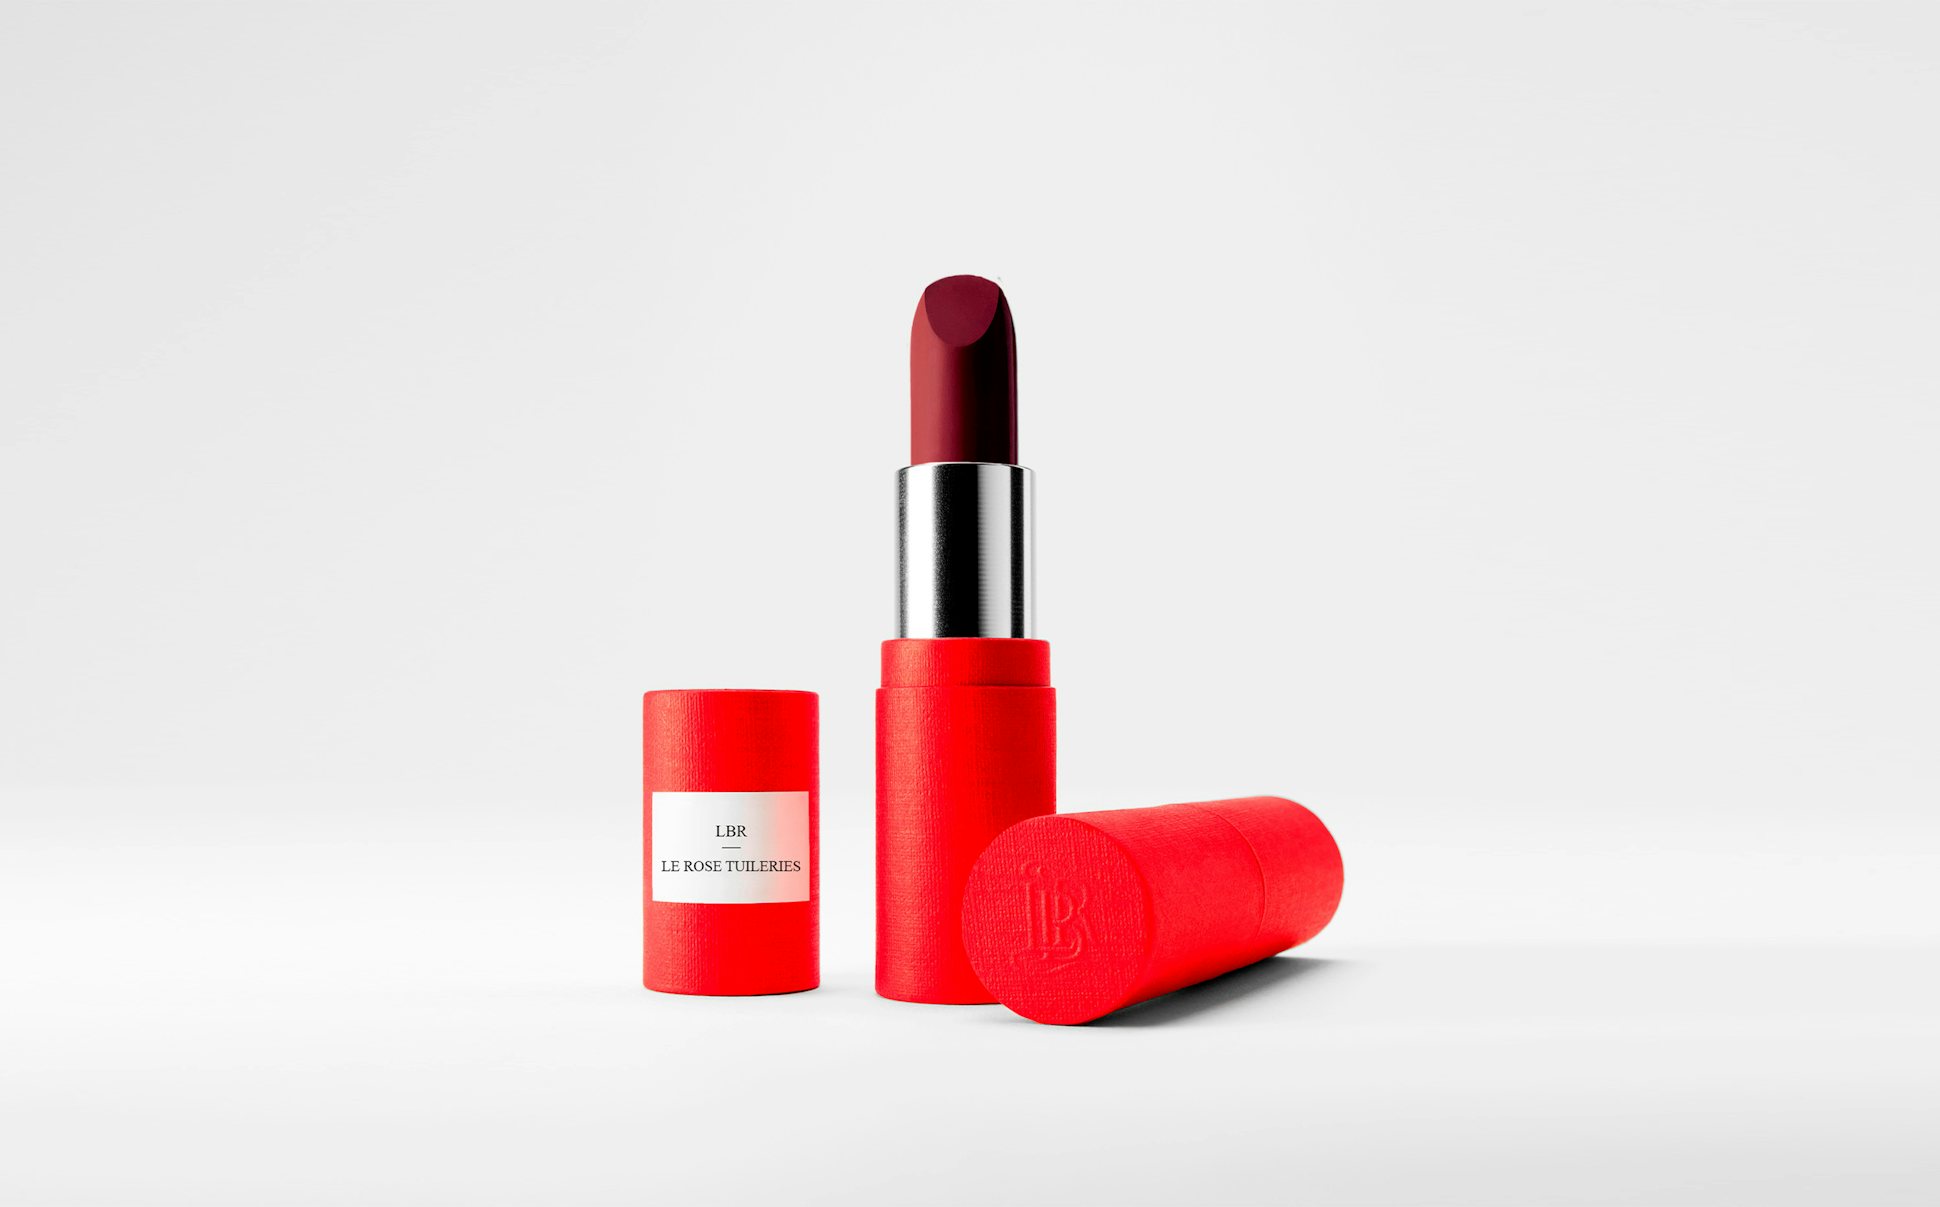 La bouche rouge Le Rose Tuileries lipstick in the red paper case